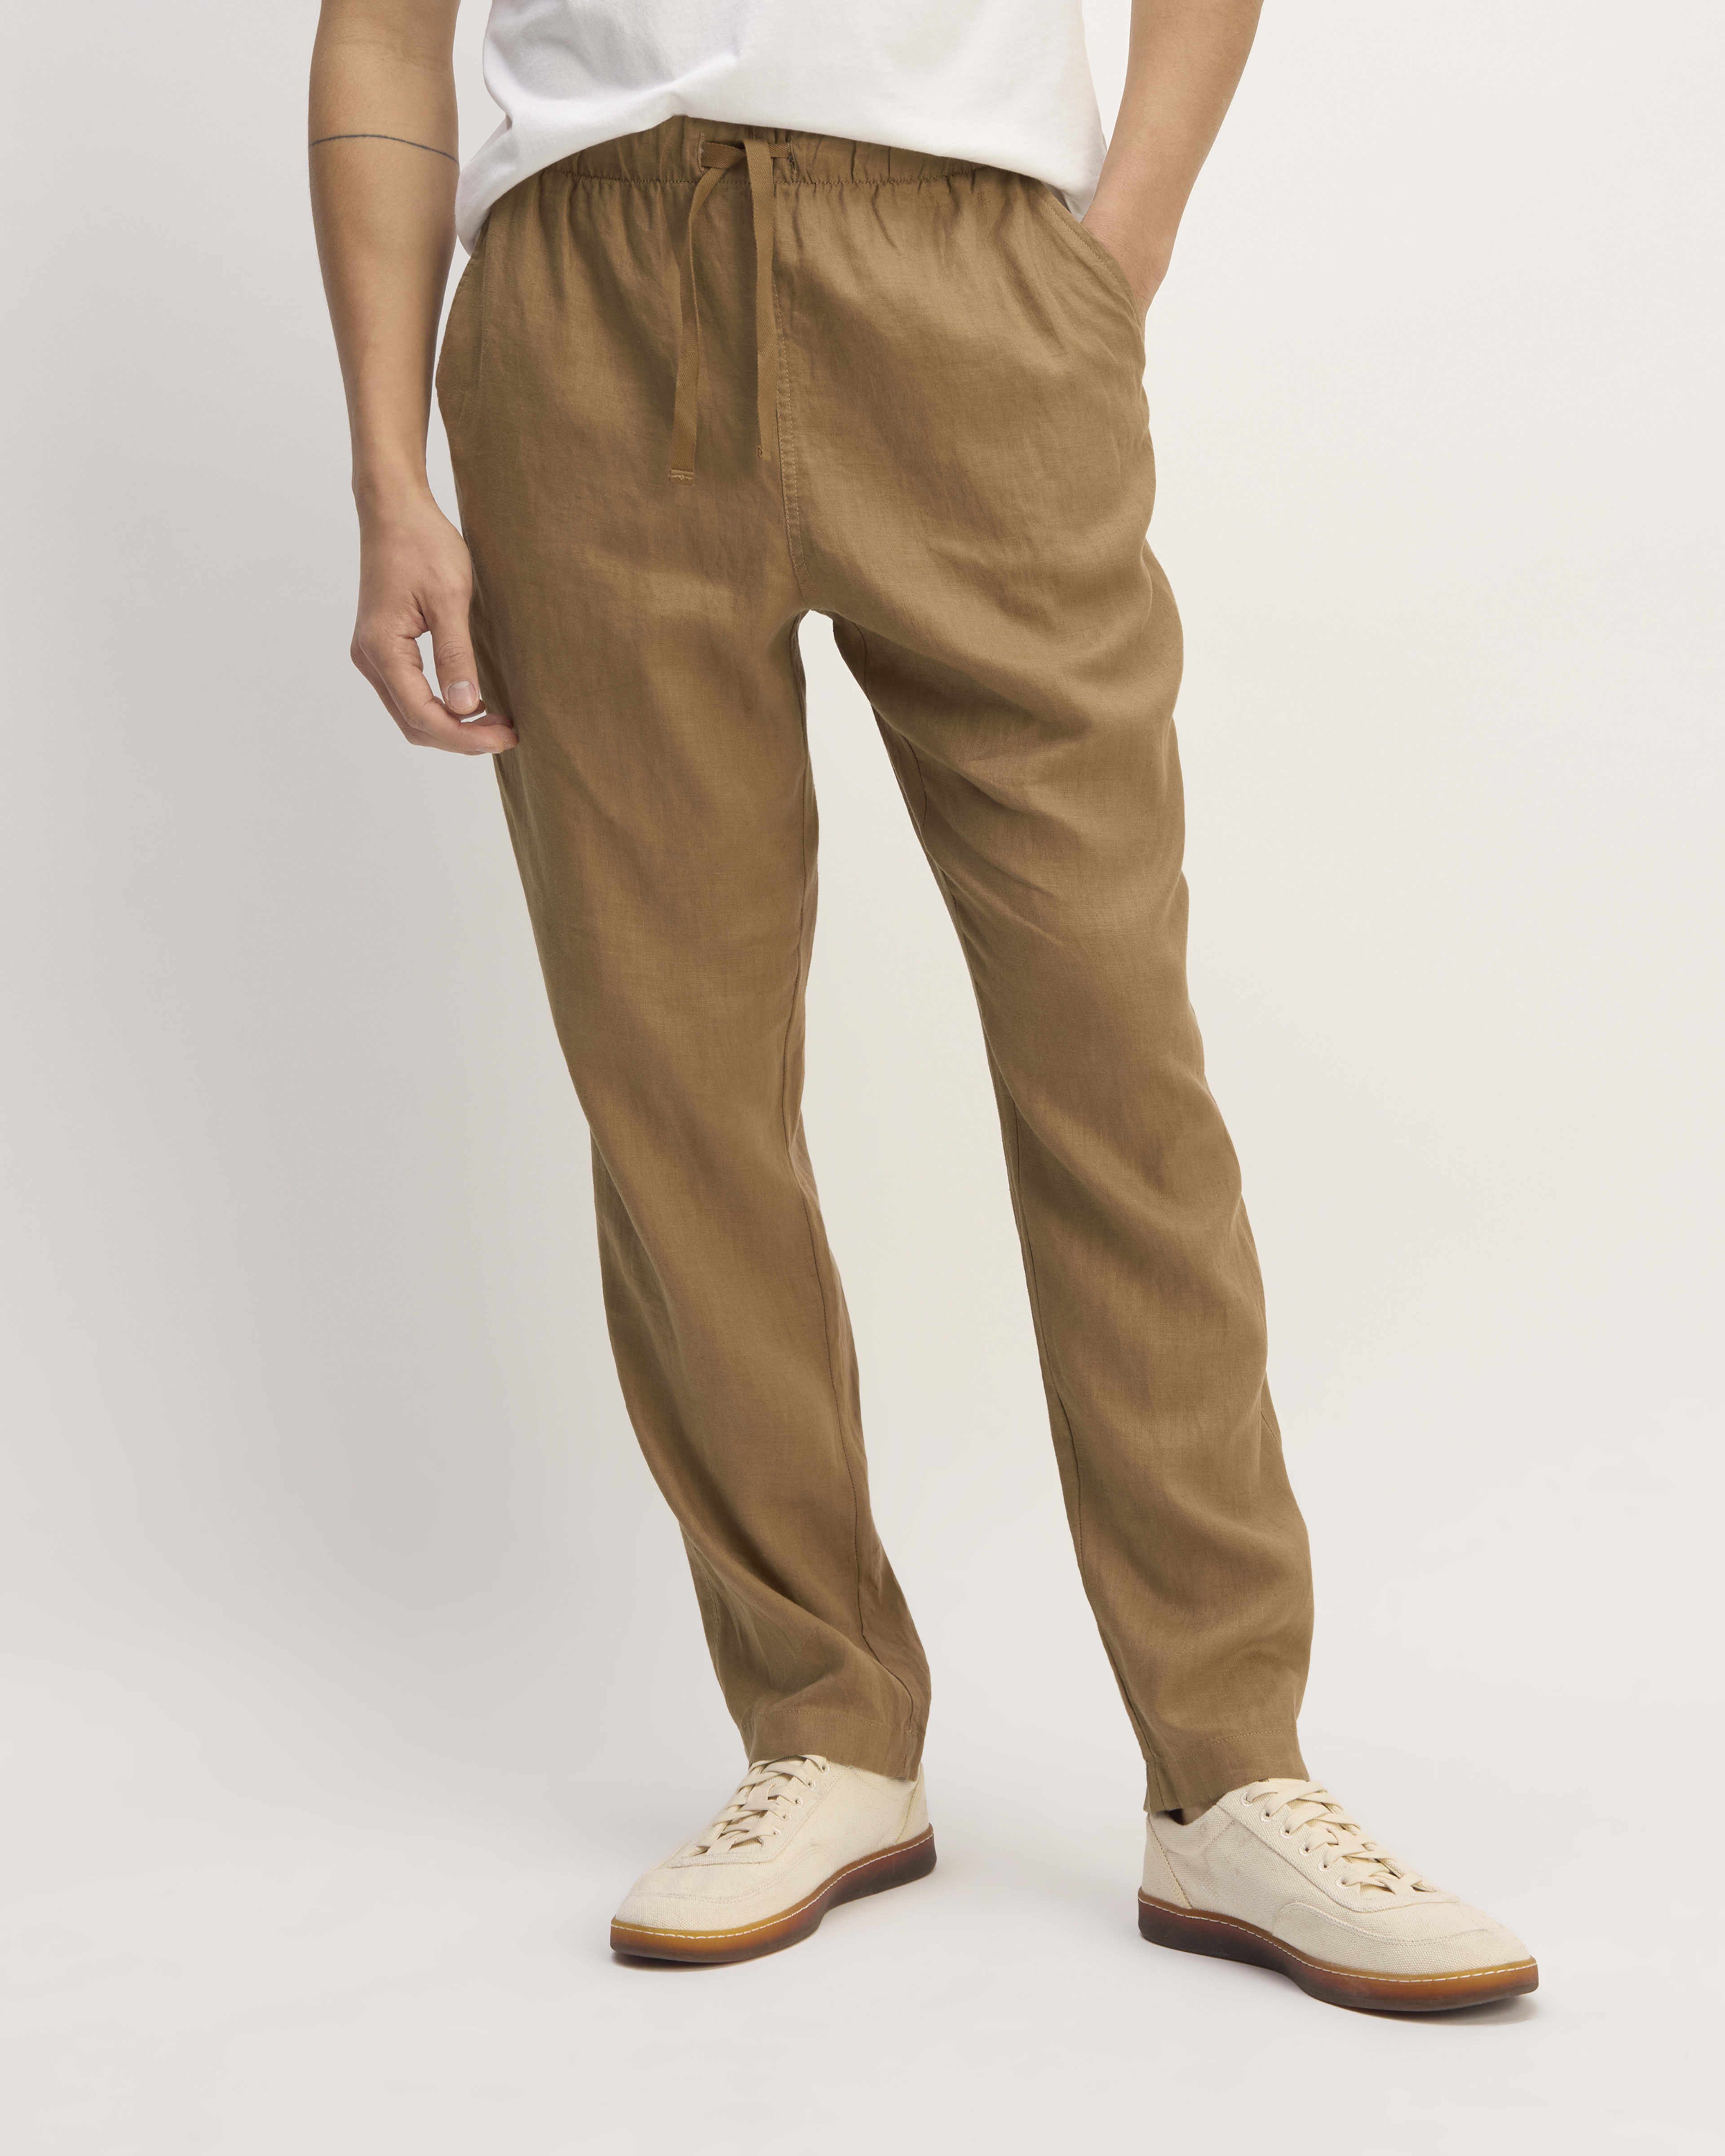 TAPERED FIT Traveler Chino Pants for Tall Men in Light Khaki